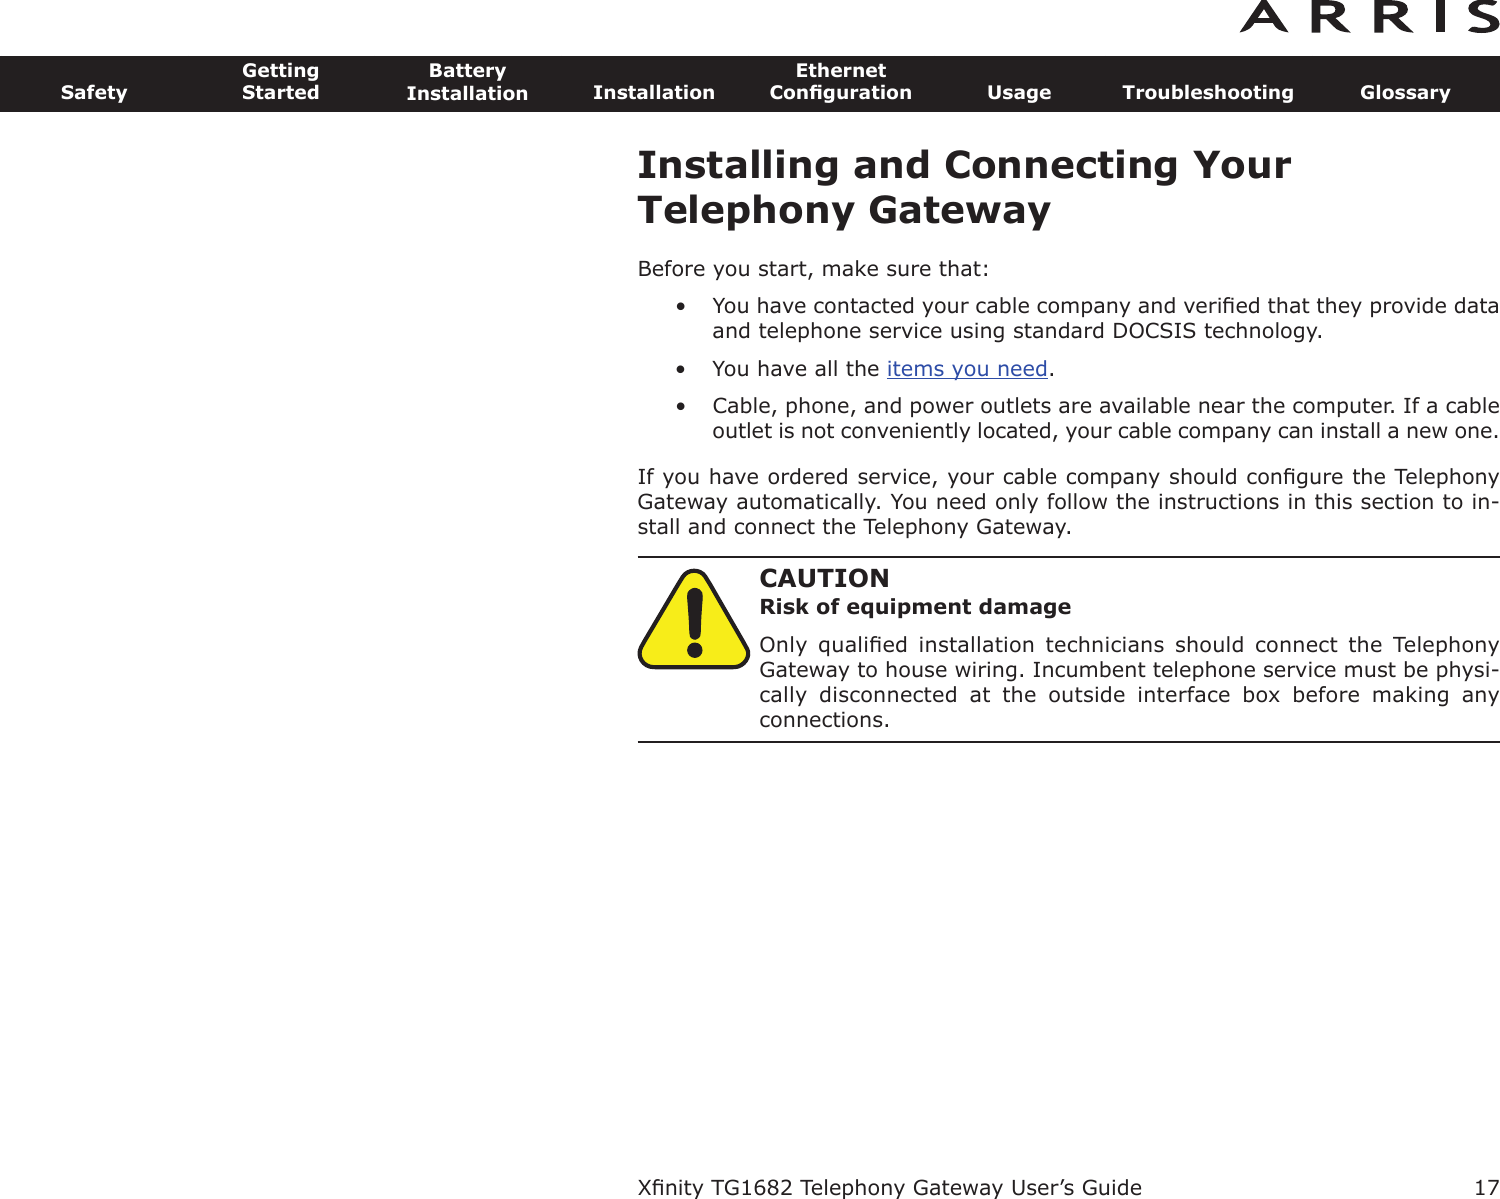 ARRIS Group TG1682-2 Touchstone Wireless Telephony Gateway User Manual